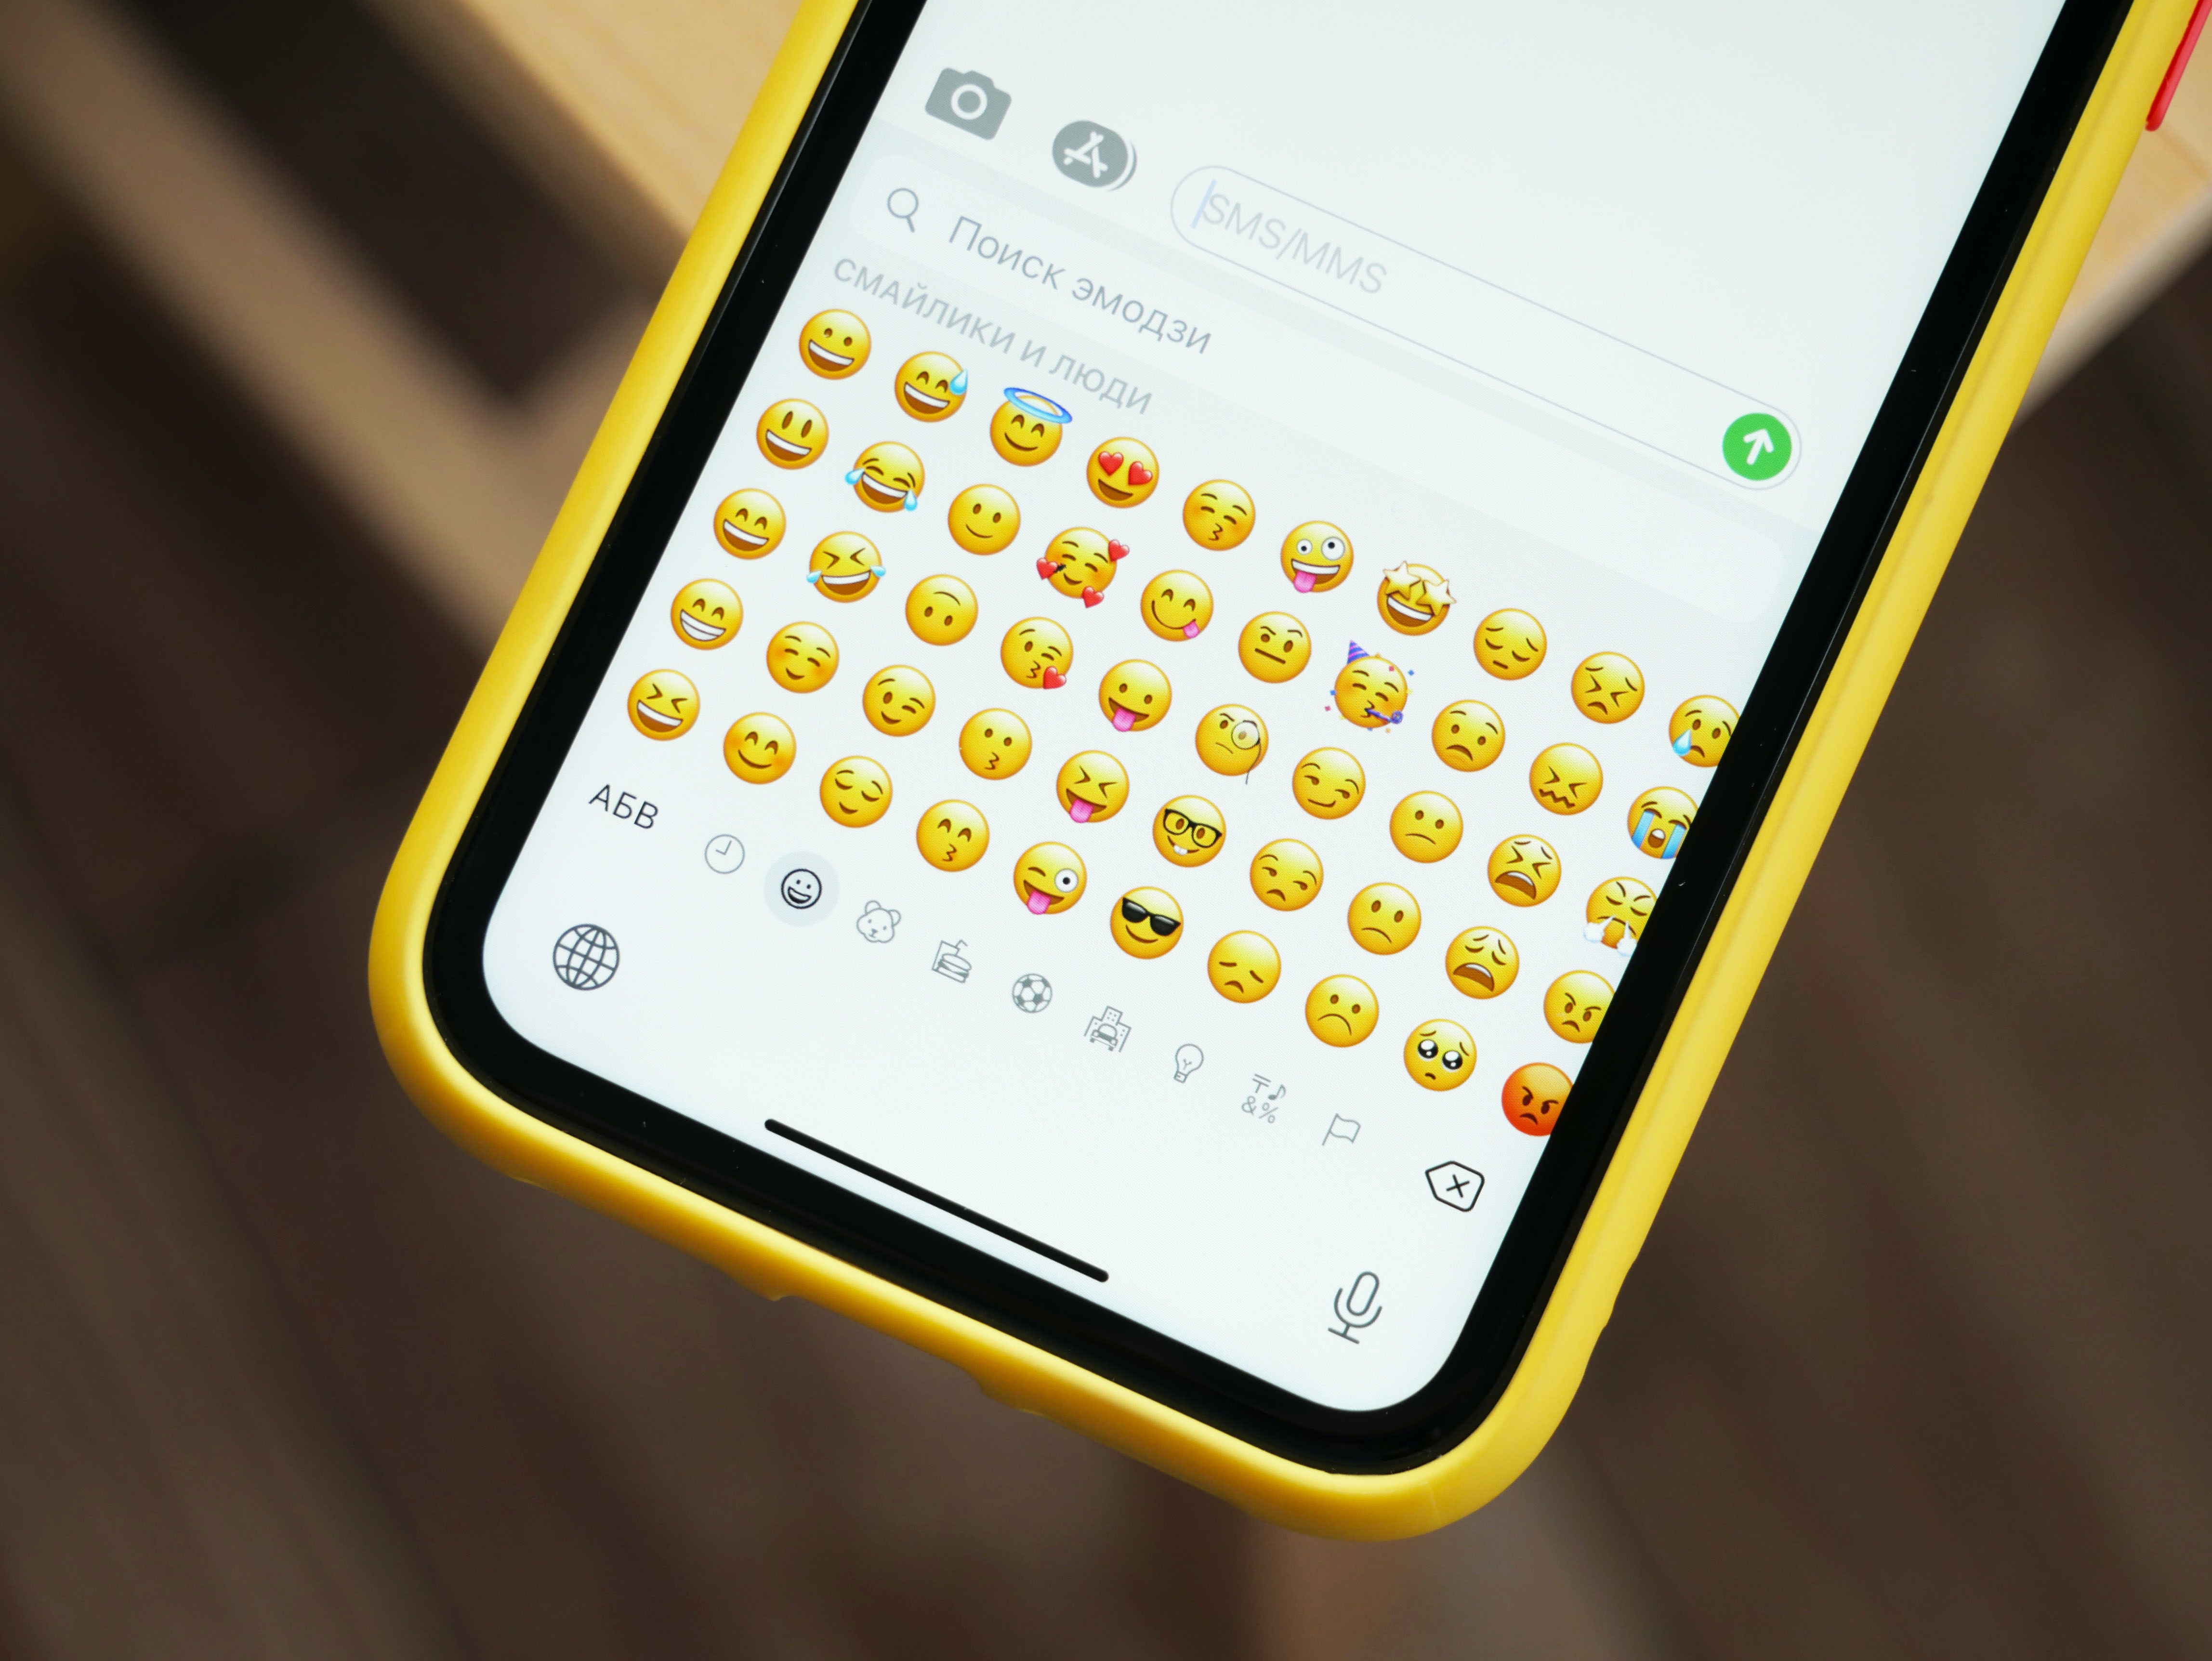 Phone with an emoji keyboard open showing face emojis